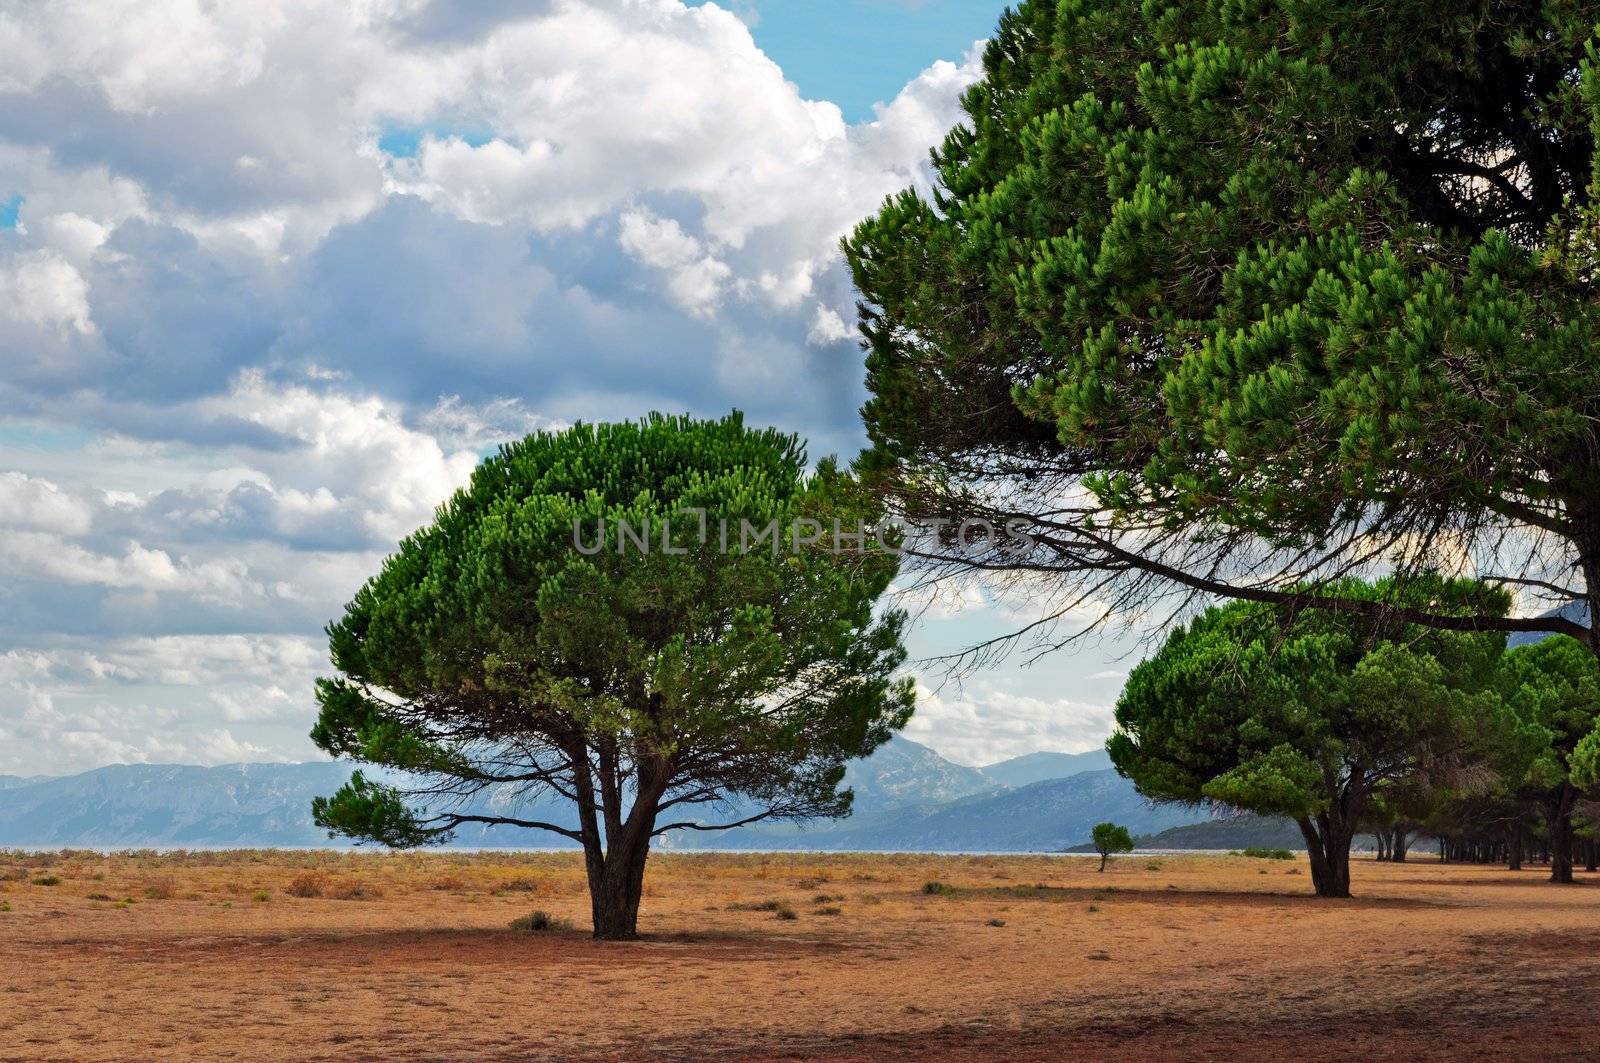 Maritime Pine on a Sardinian beach by rmarinello